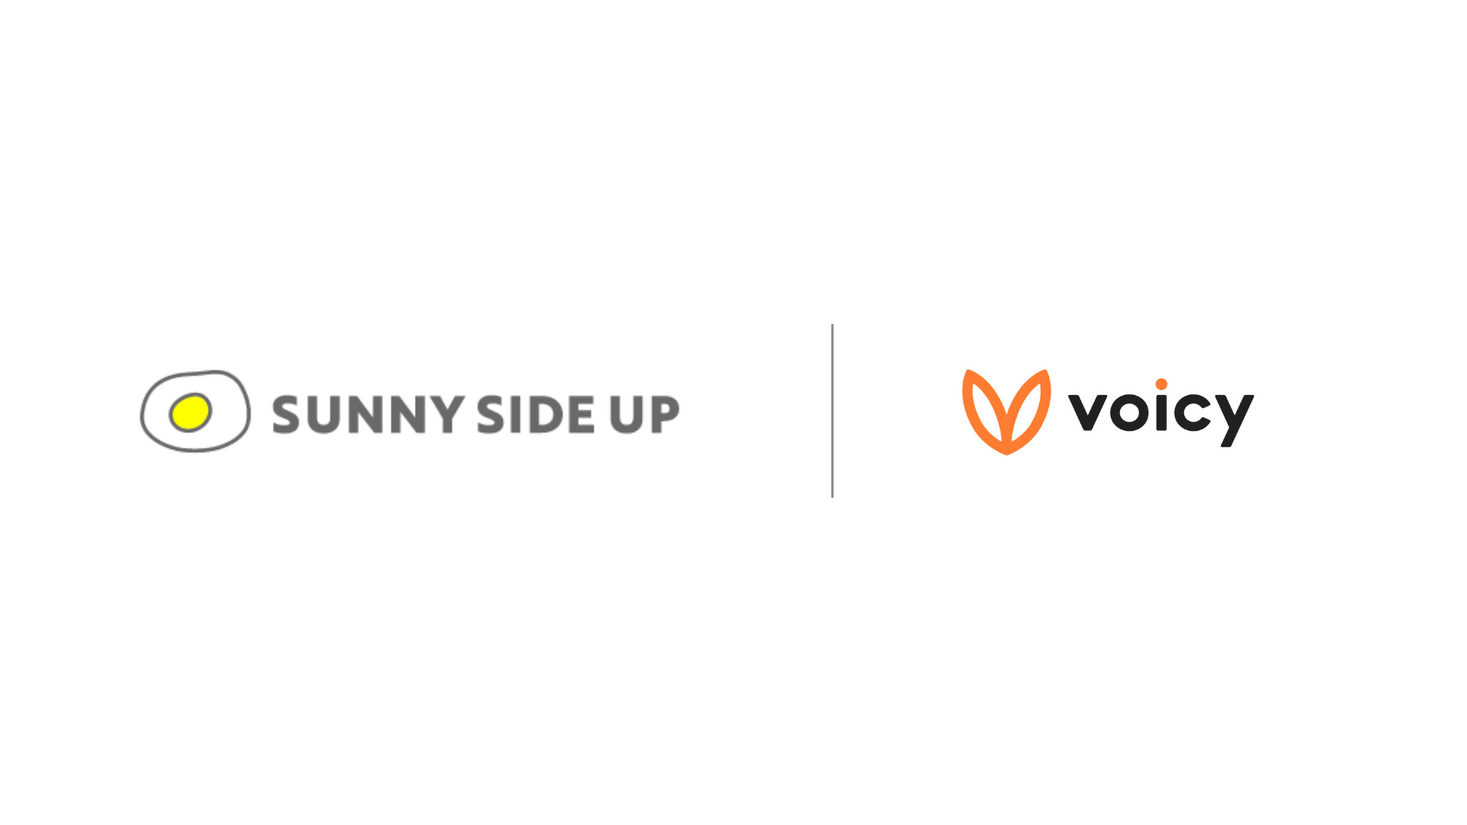 Voicy、音声を活用した企業向けソリューション開発に向け、サニーサイドアップとパートナーシップ契約を締結。